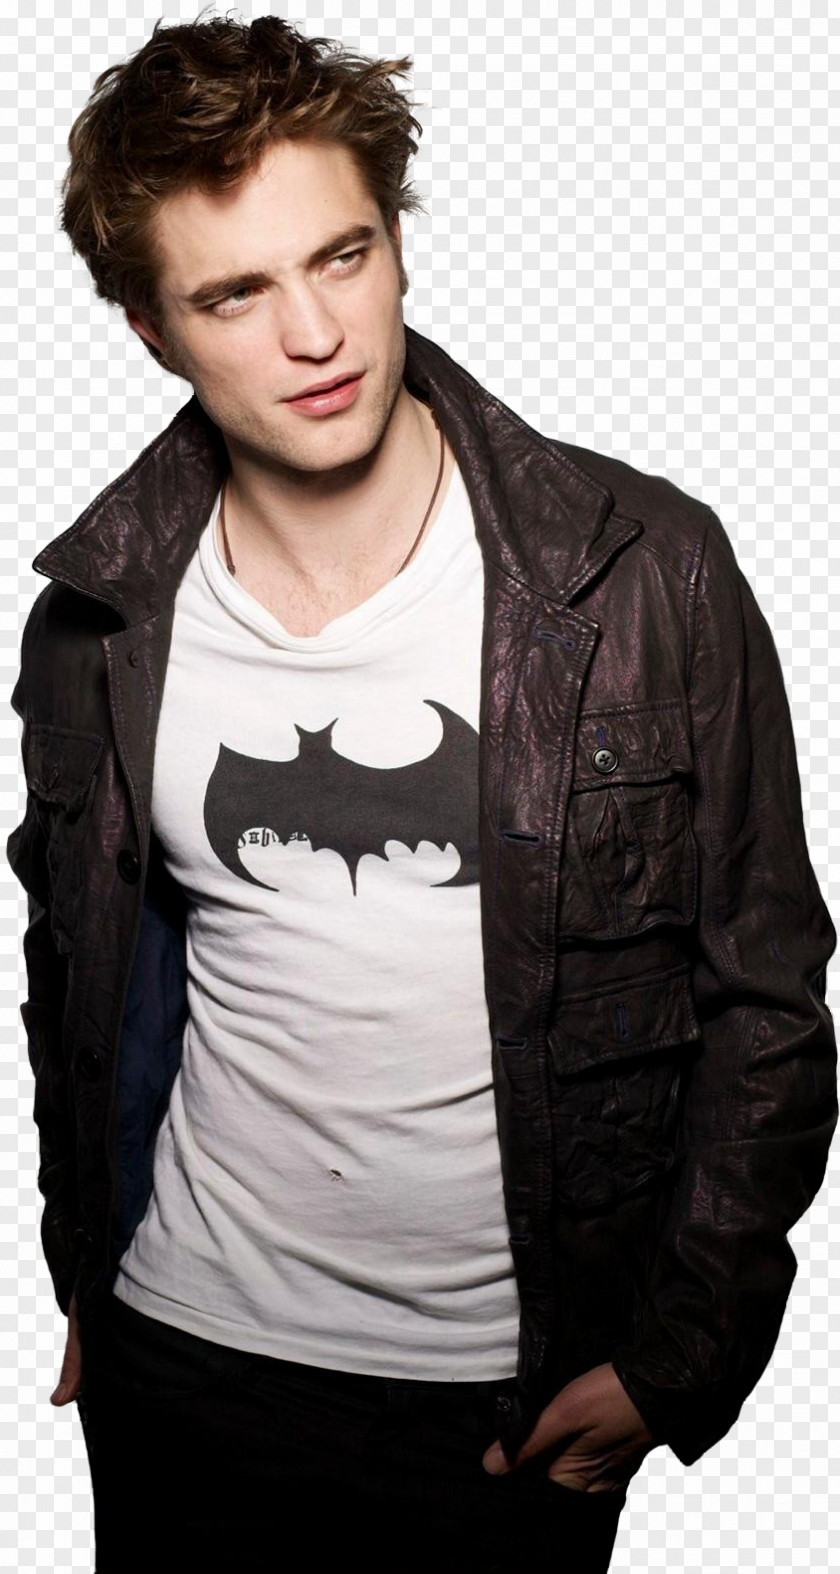 Ashley Greene Robert Pattinson Edward Cullen The Twilight Saga PNG